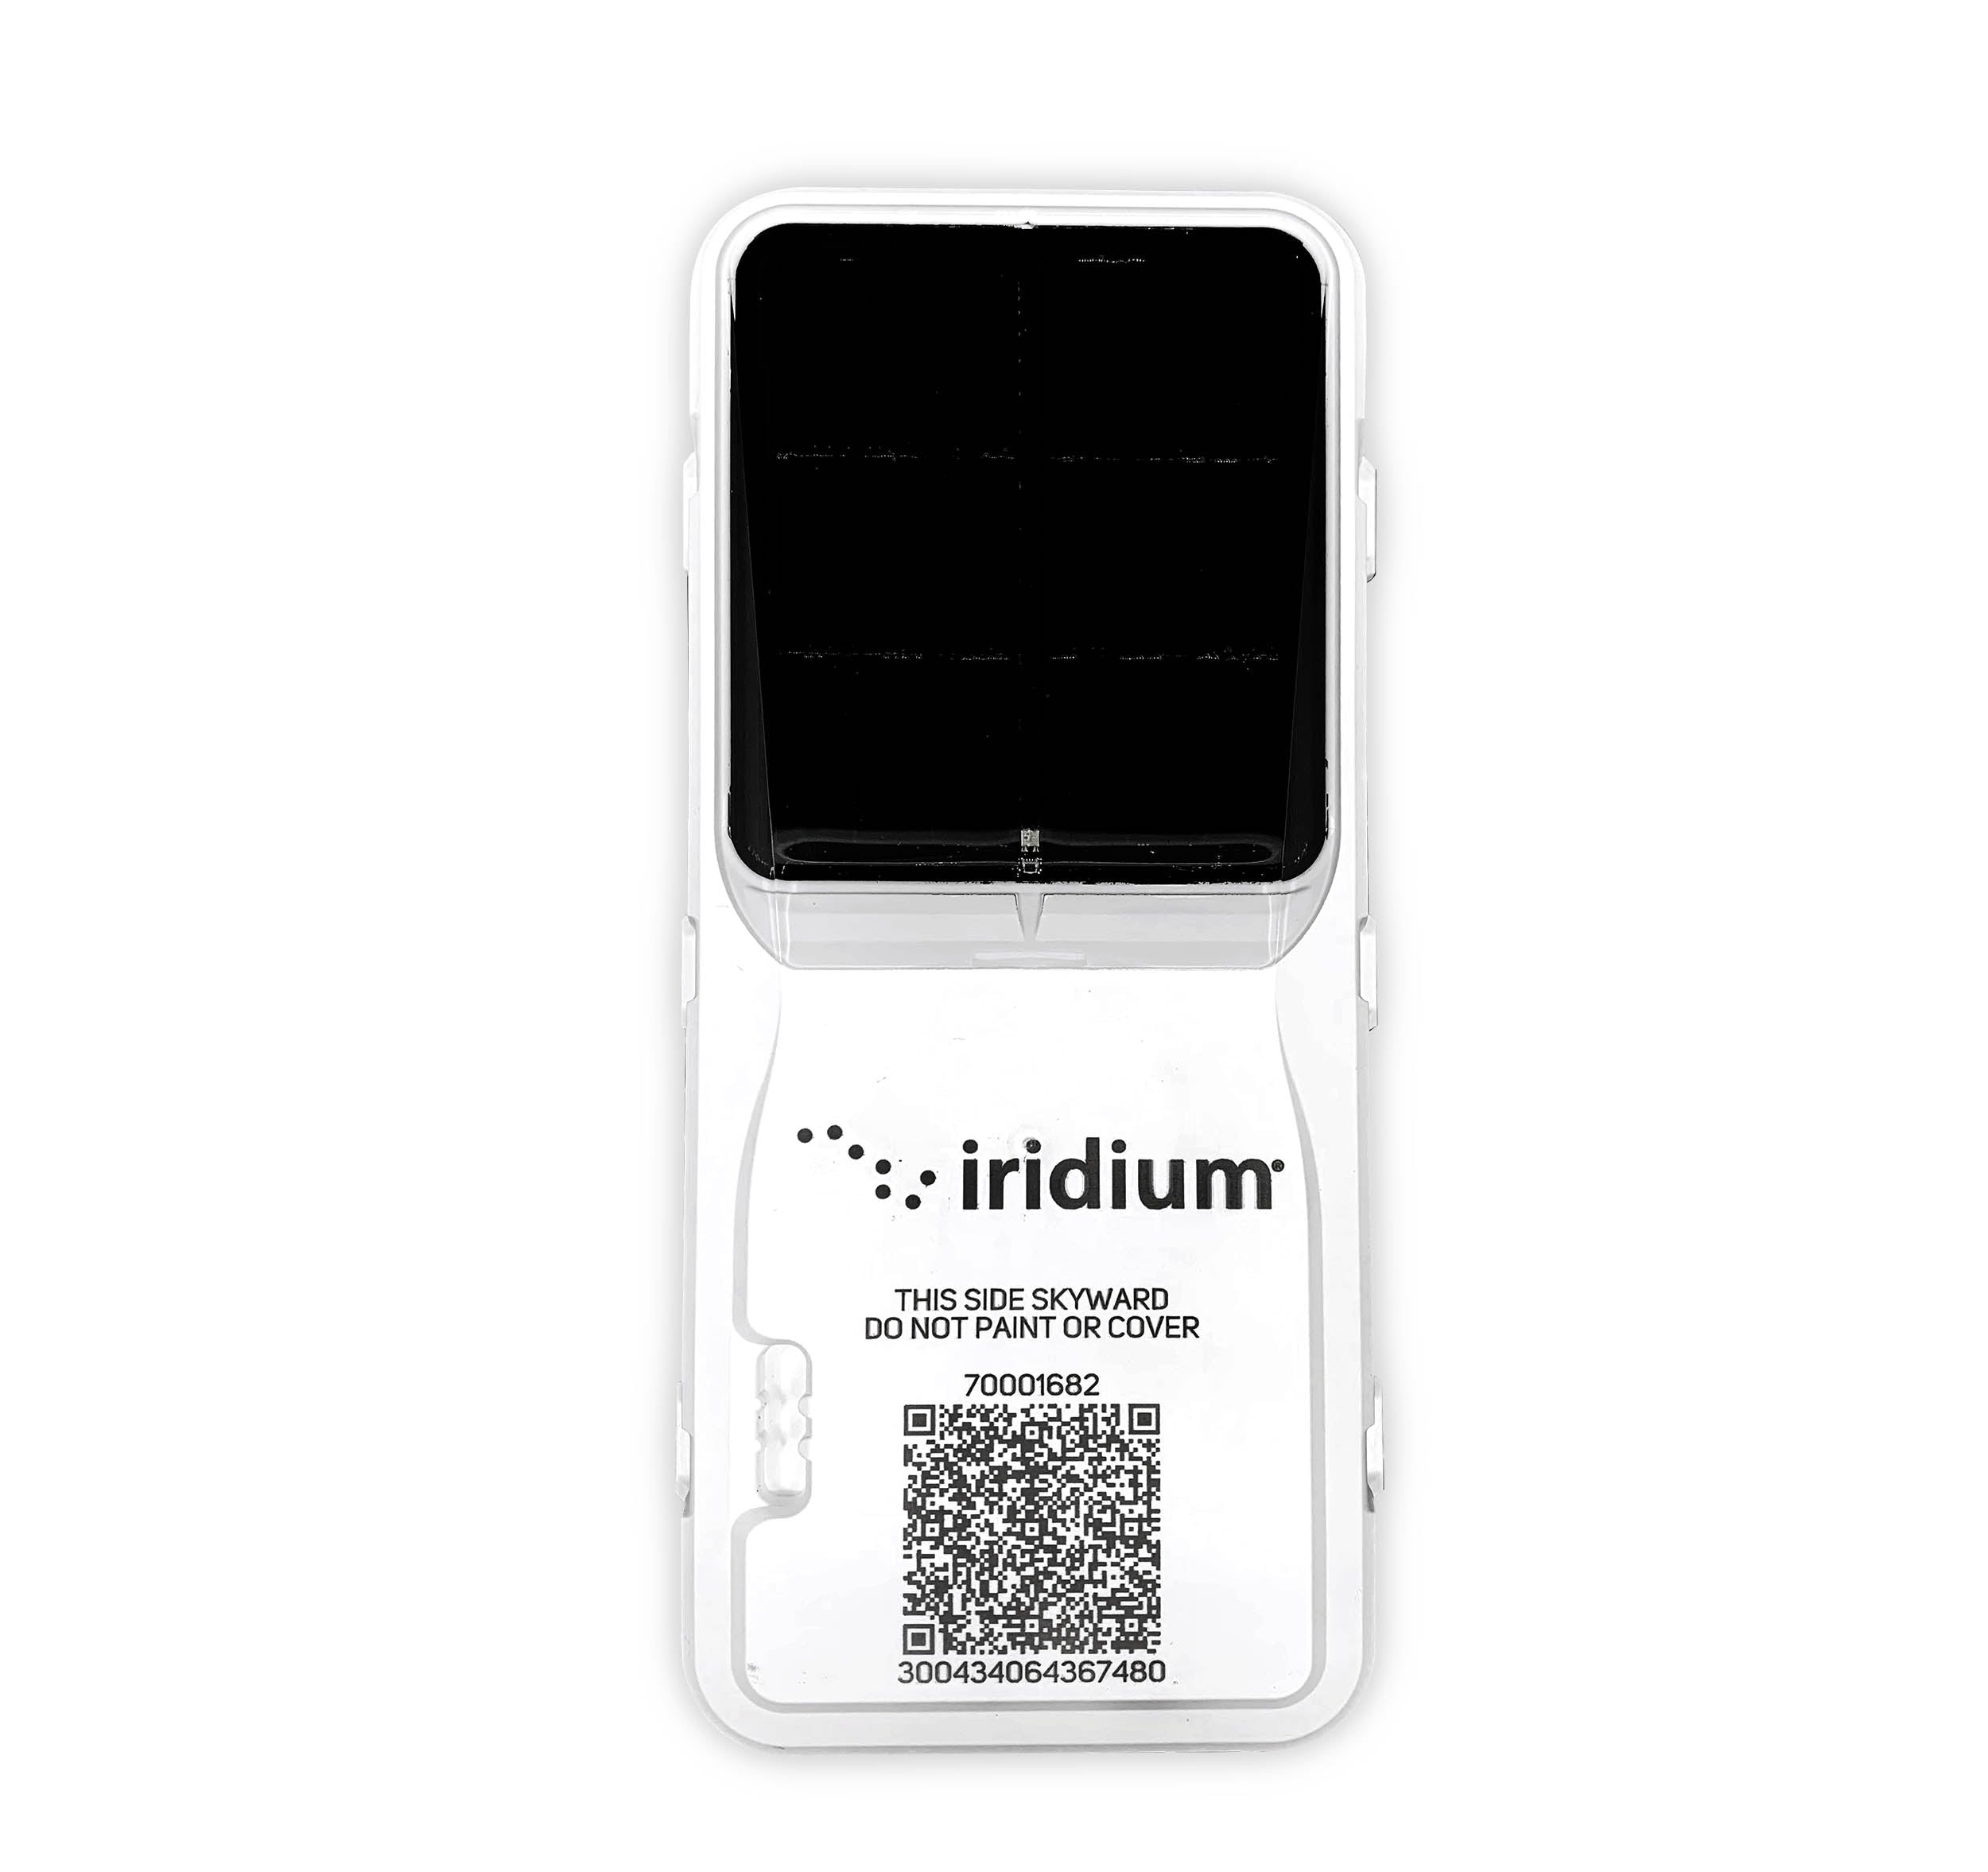 EVERYWHERE Iridium Edge Solar – EVERYWHERE Communications